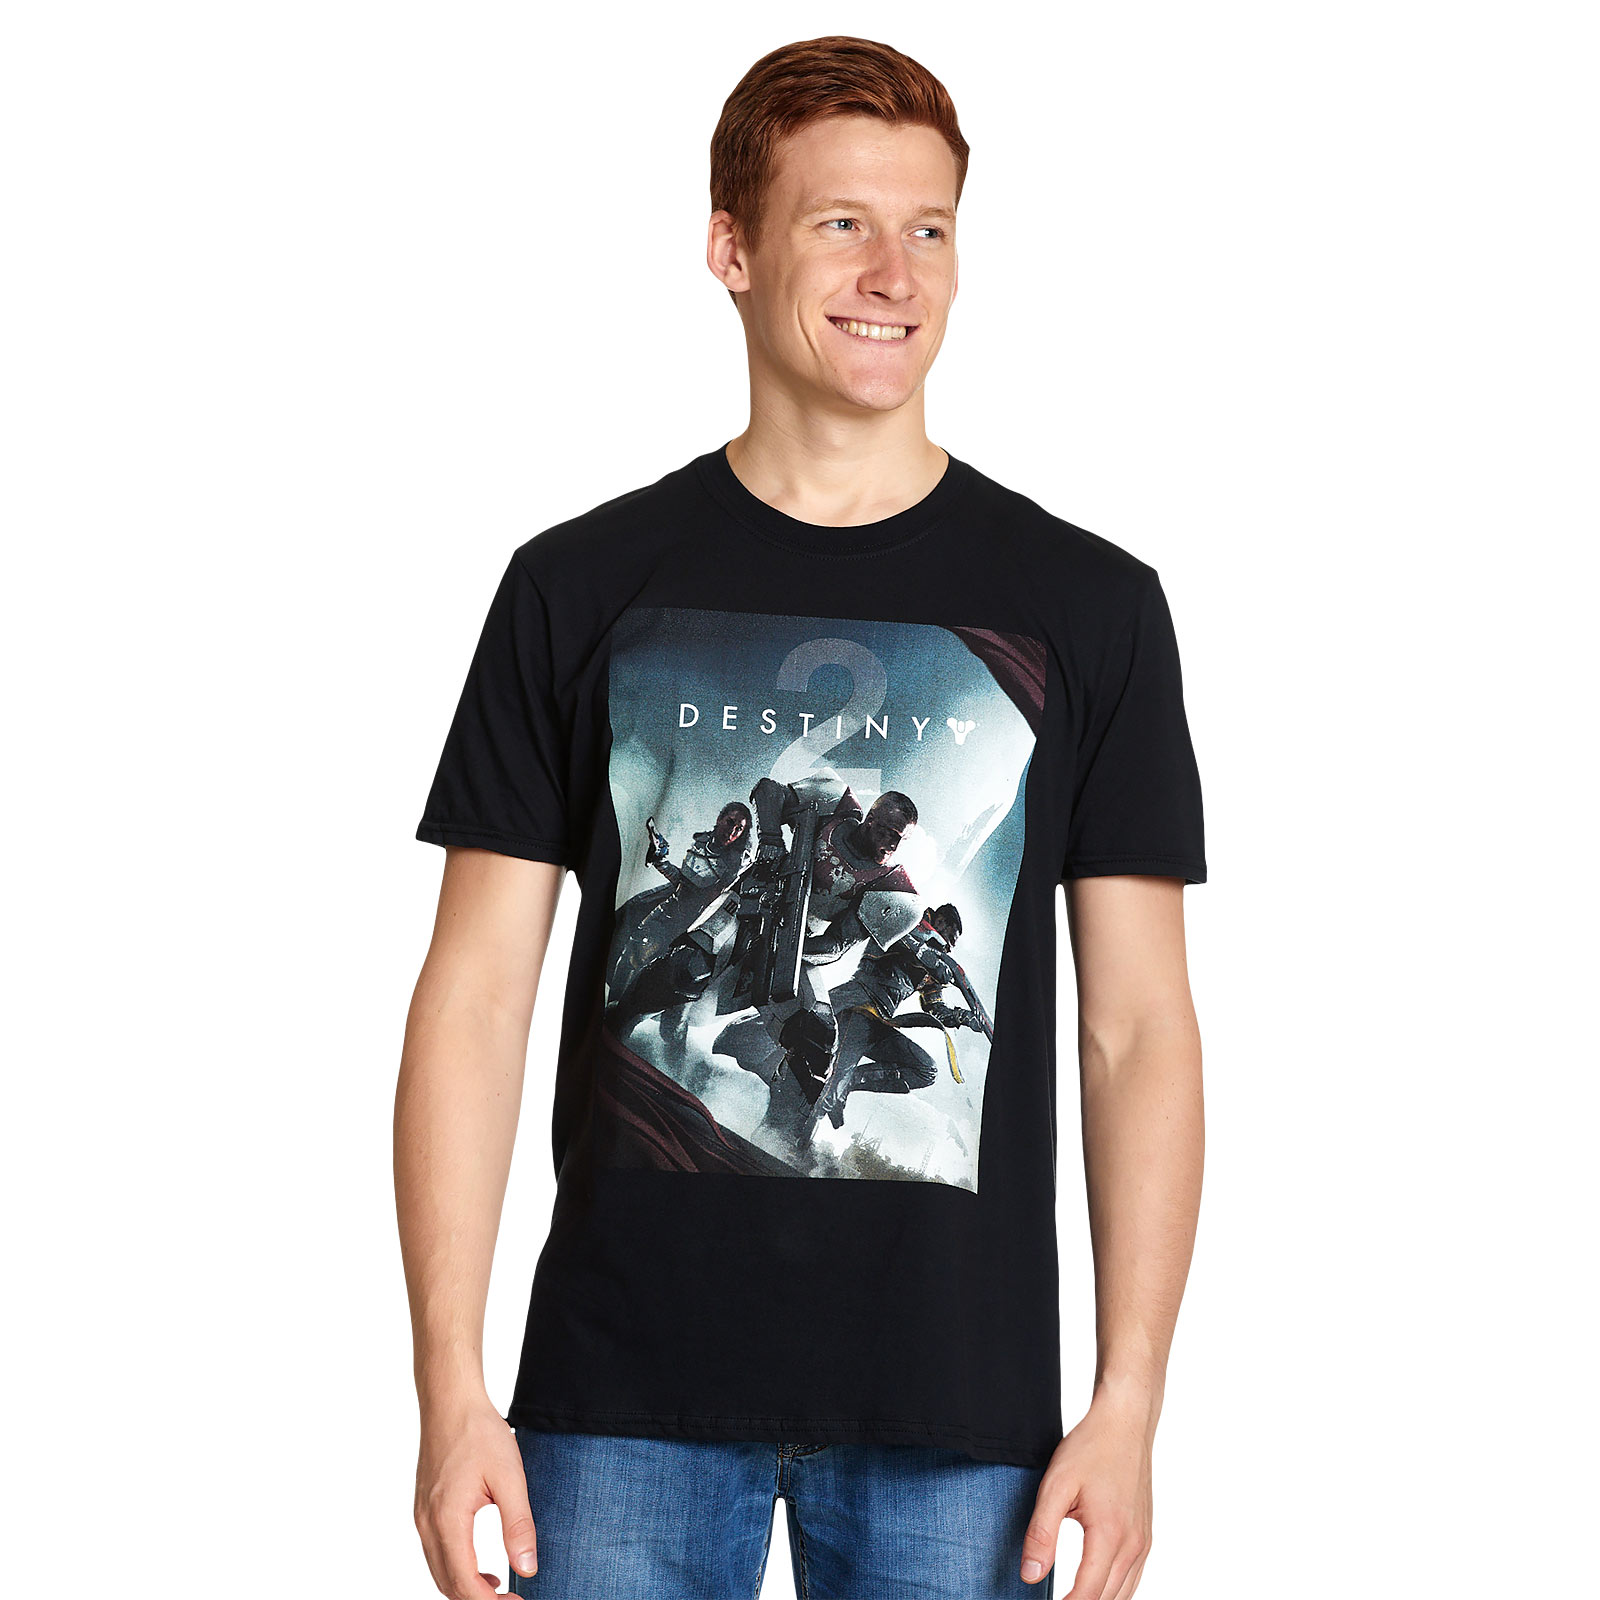 Destiny - Shooters T-Shirt schwarz